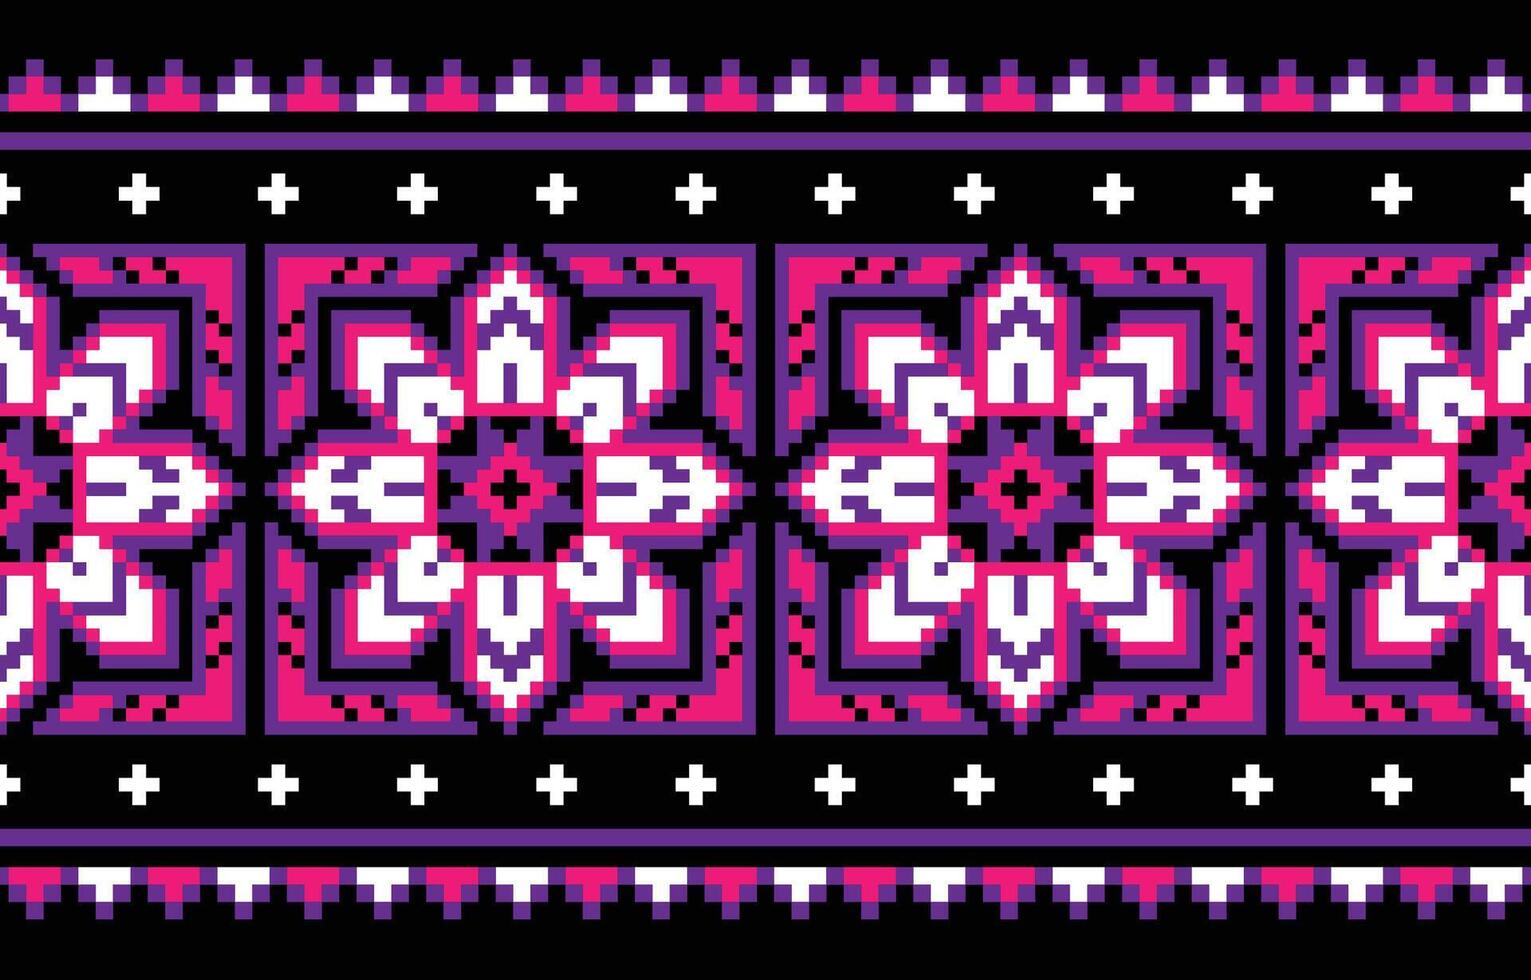 Ethnic pattern geometric fabric patterns black background . Vector illustration design by geometric aztec batik fabric knitting square cloth handmade wallpaper